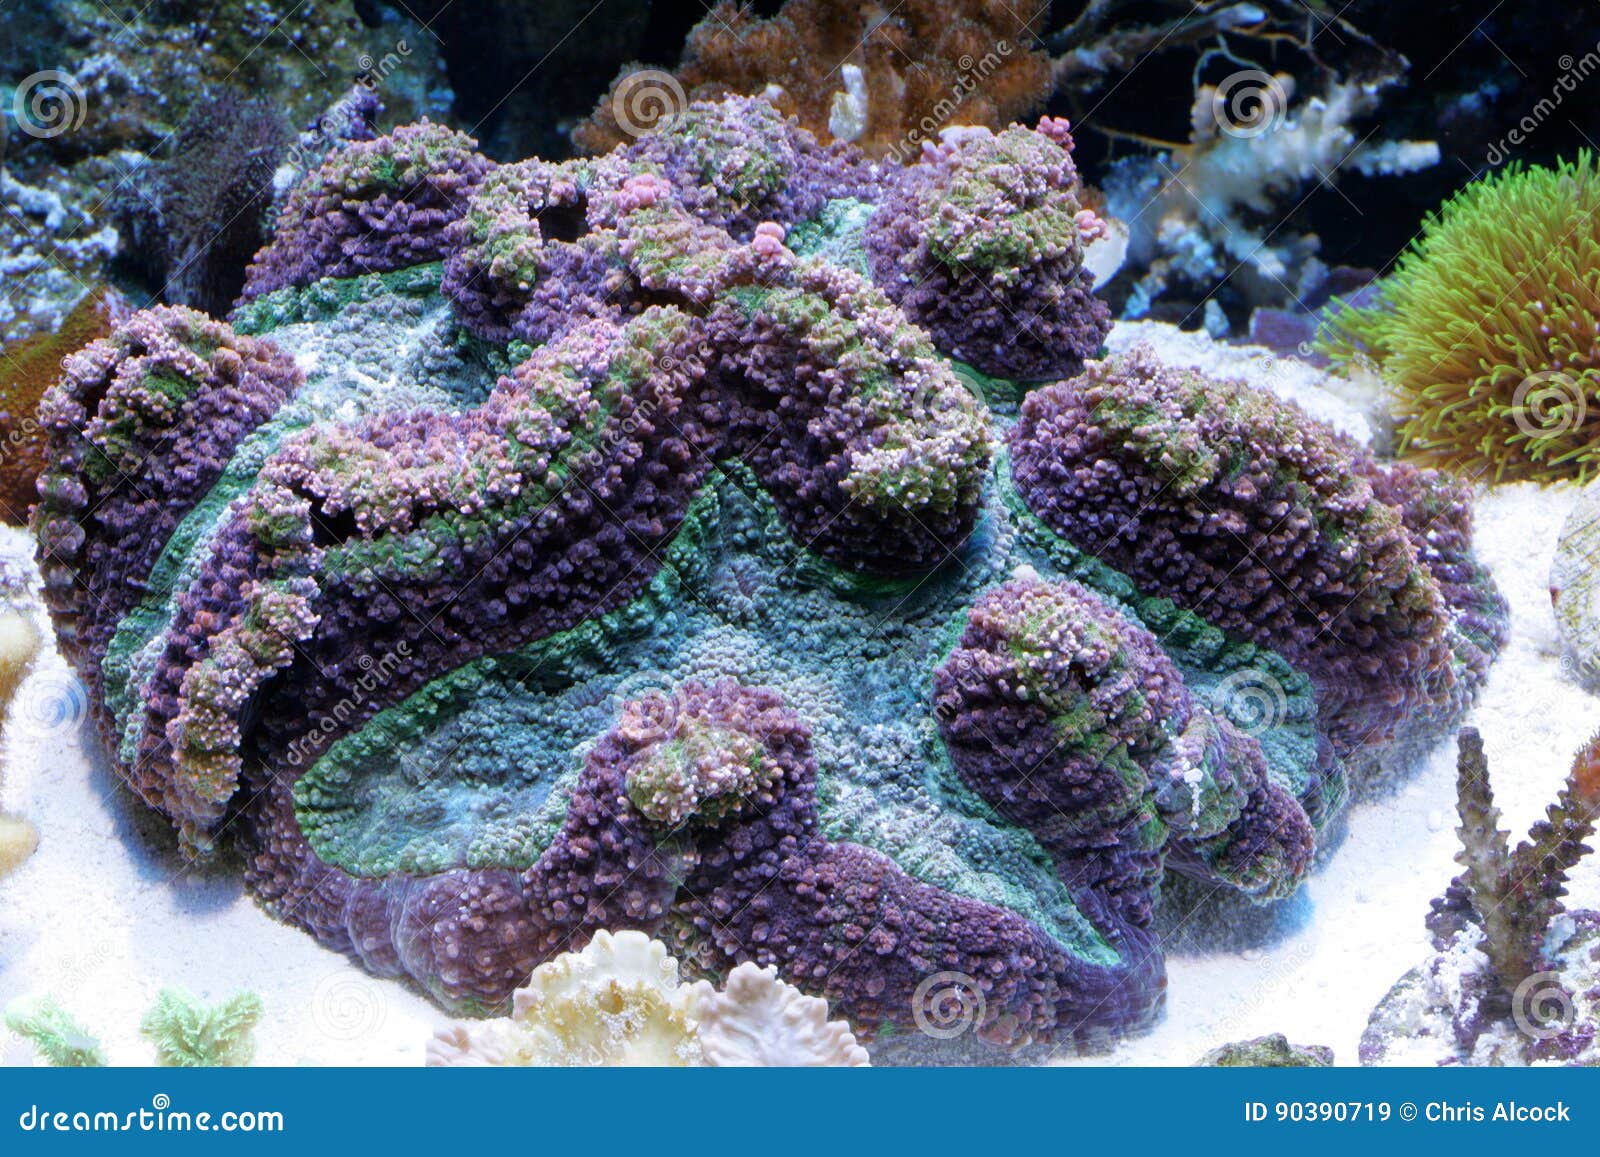 Corail. Vie marine dans un aquarium en verre en eau de mer